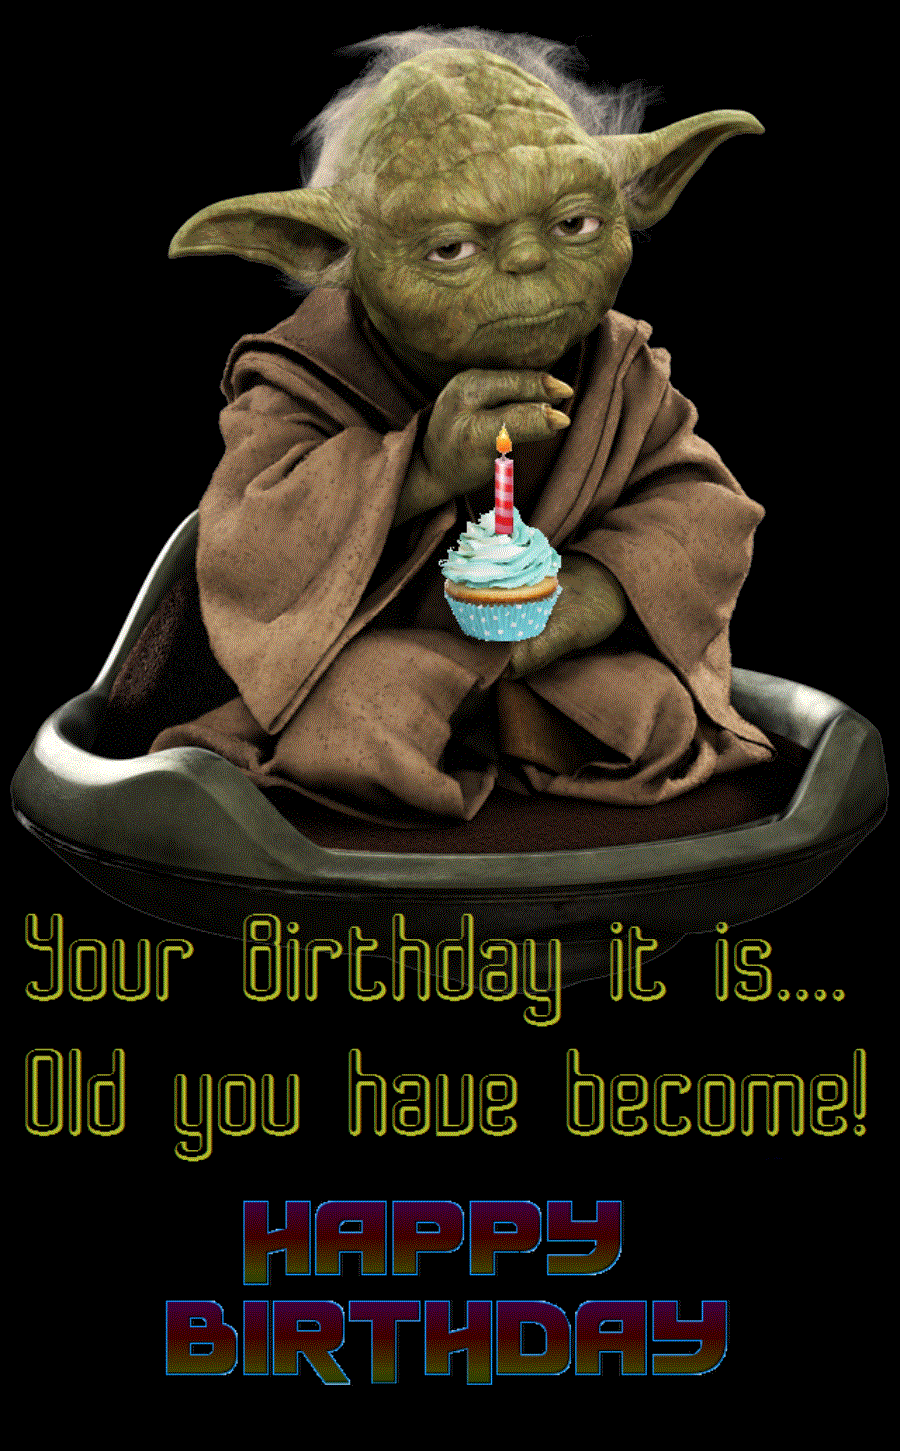 Happy Birthday Yoda Star Wars Meme Funny Images download